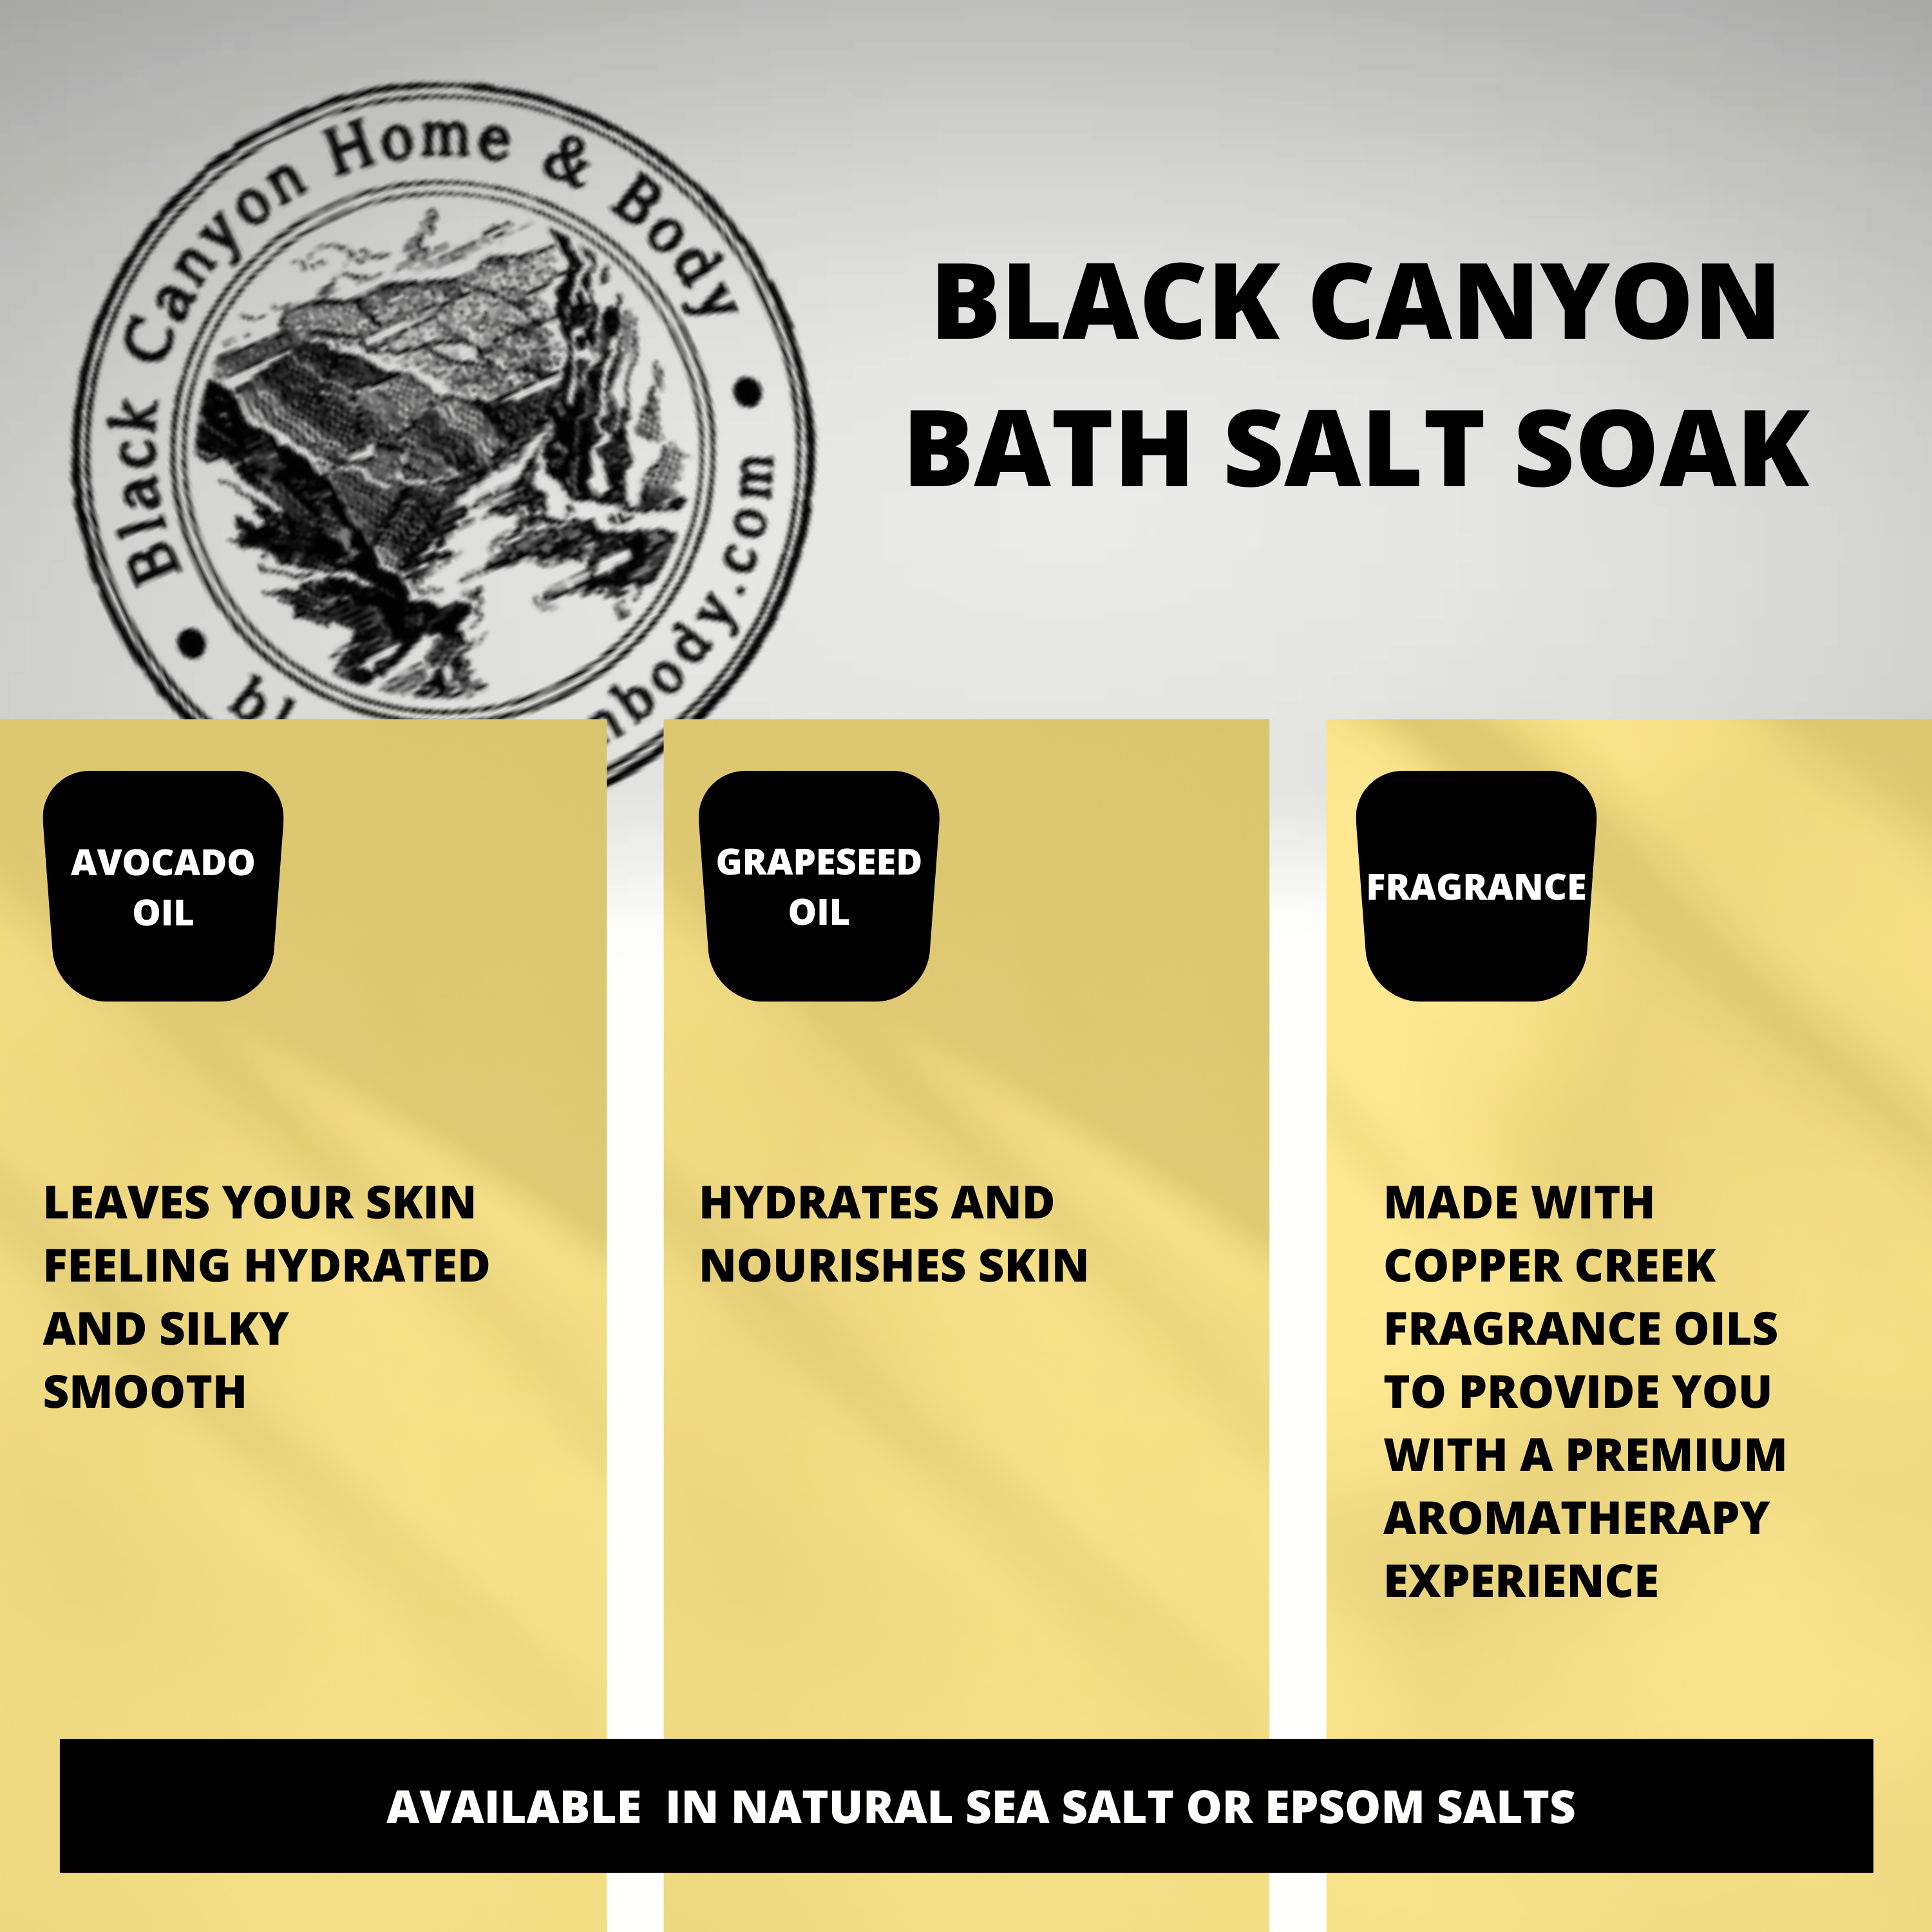 Black Canyon Dark Chocolate Scented Sea Salt Bath Soak